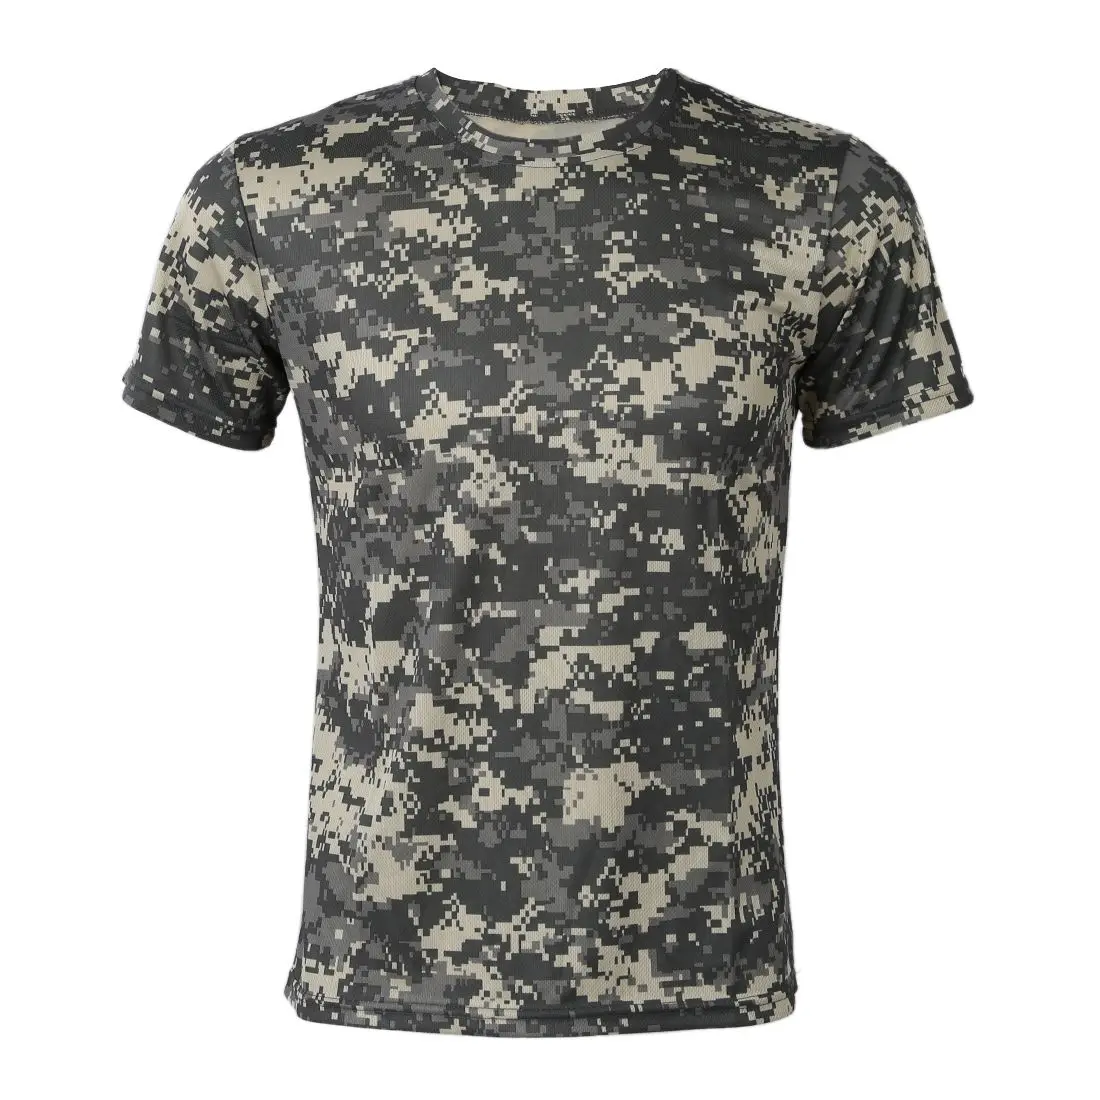 Новая уличная камуфляжная футболка для охоты Мужская дышащая армейская тактическая Боевая футболка Военная сухая Спортивная Camo Camp Tees-ACU